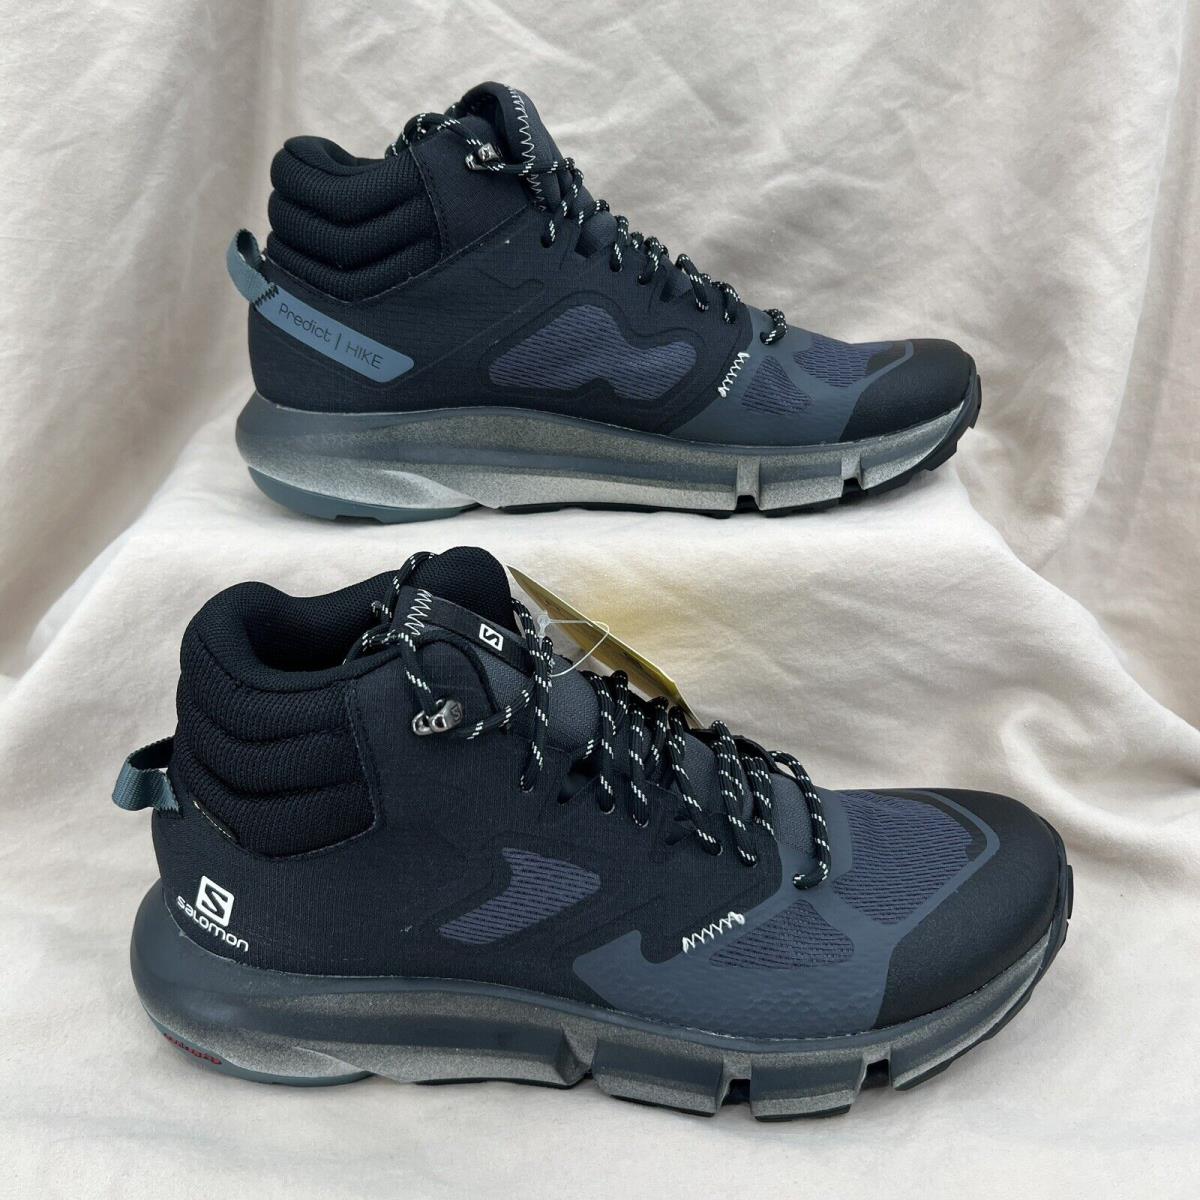 Salomon Predict Hike Mid Gtx Hiking Shoes Mens 9 Black Grey Outdoors Sample